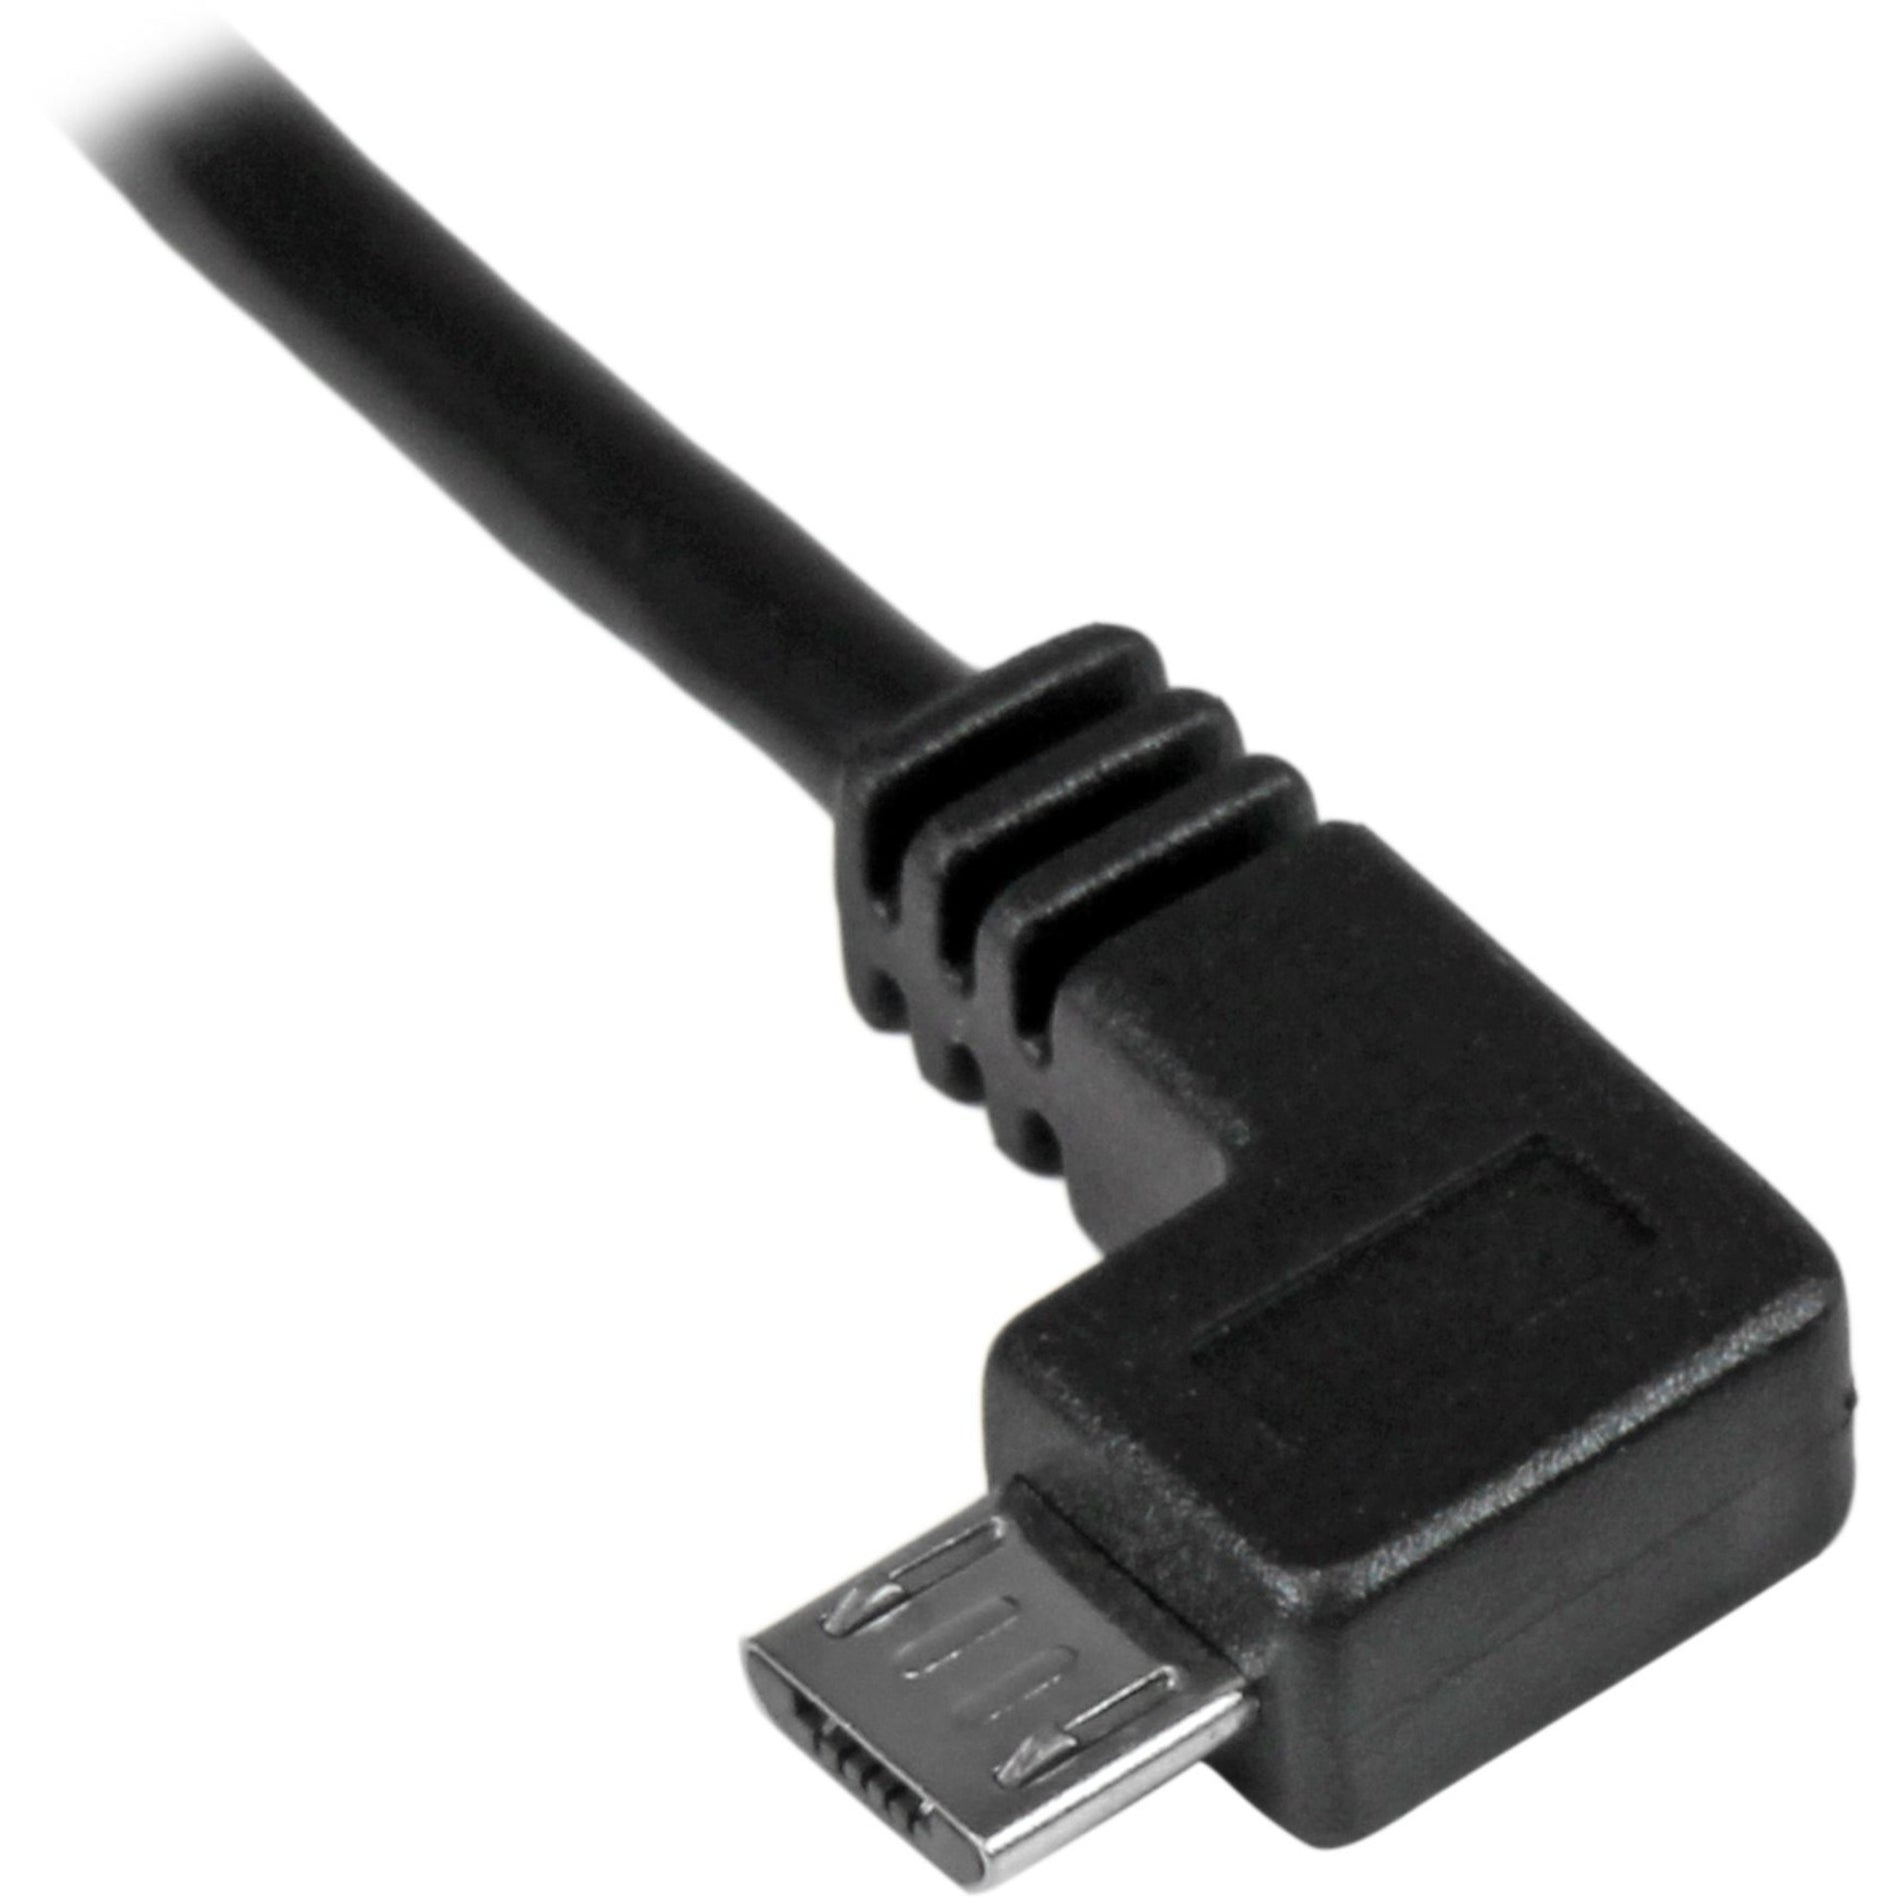 StarTech.com USBAUB50CMLA 微型USB 充电和同步电缆 M/M - 左角微型USB - 24 AWG 0.5 米 充电和同步电缆 品牌名称：StarTech.com 品牌名称翻译：星科技